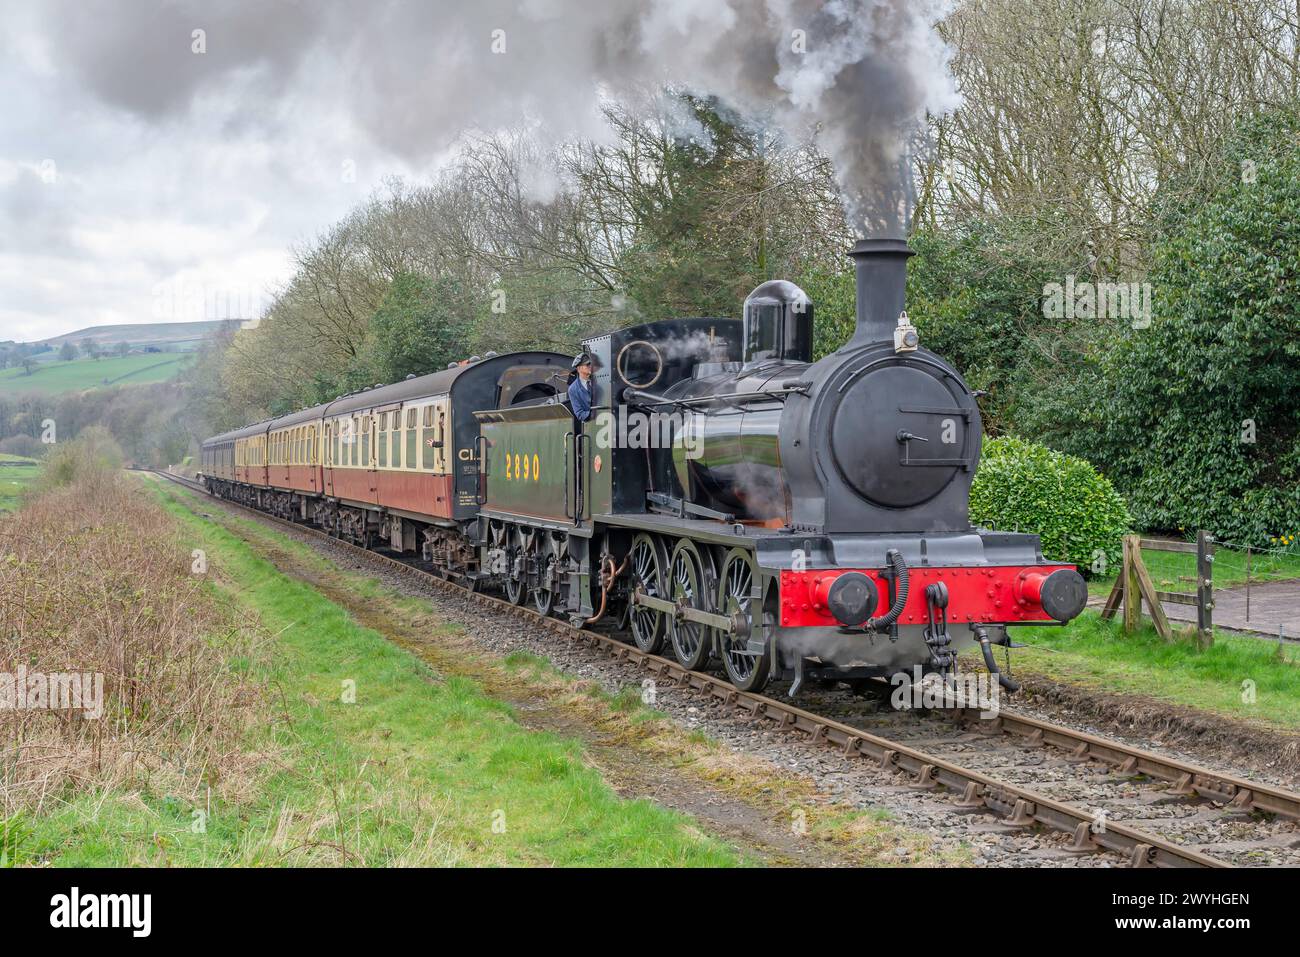 Preserved British steam locomotive 2890 Douglas on the ELR East Lancashire Railway network Stock Photo